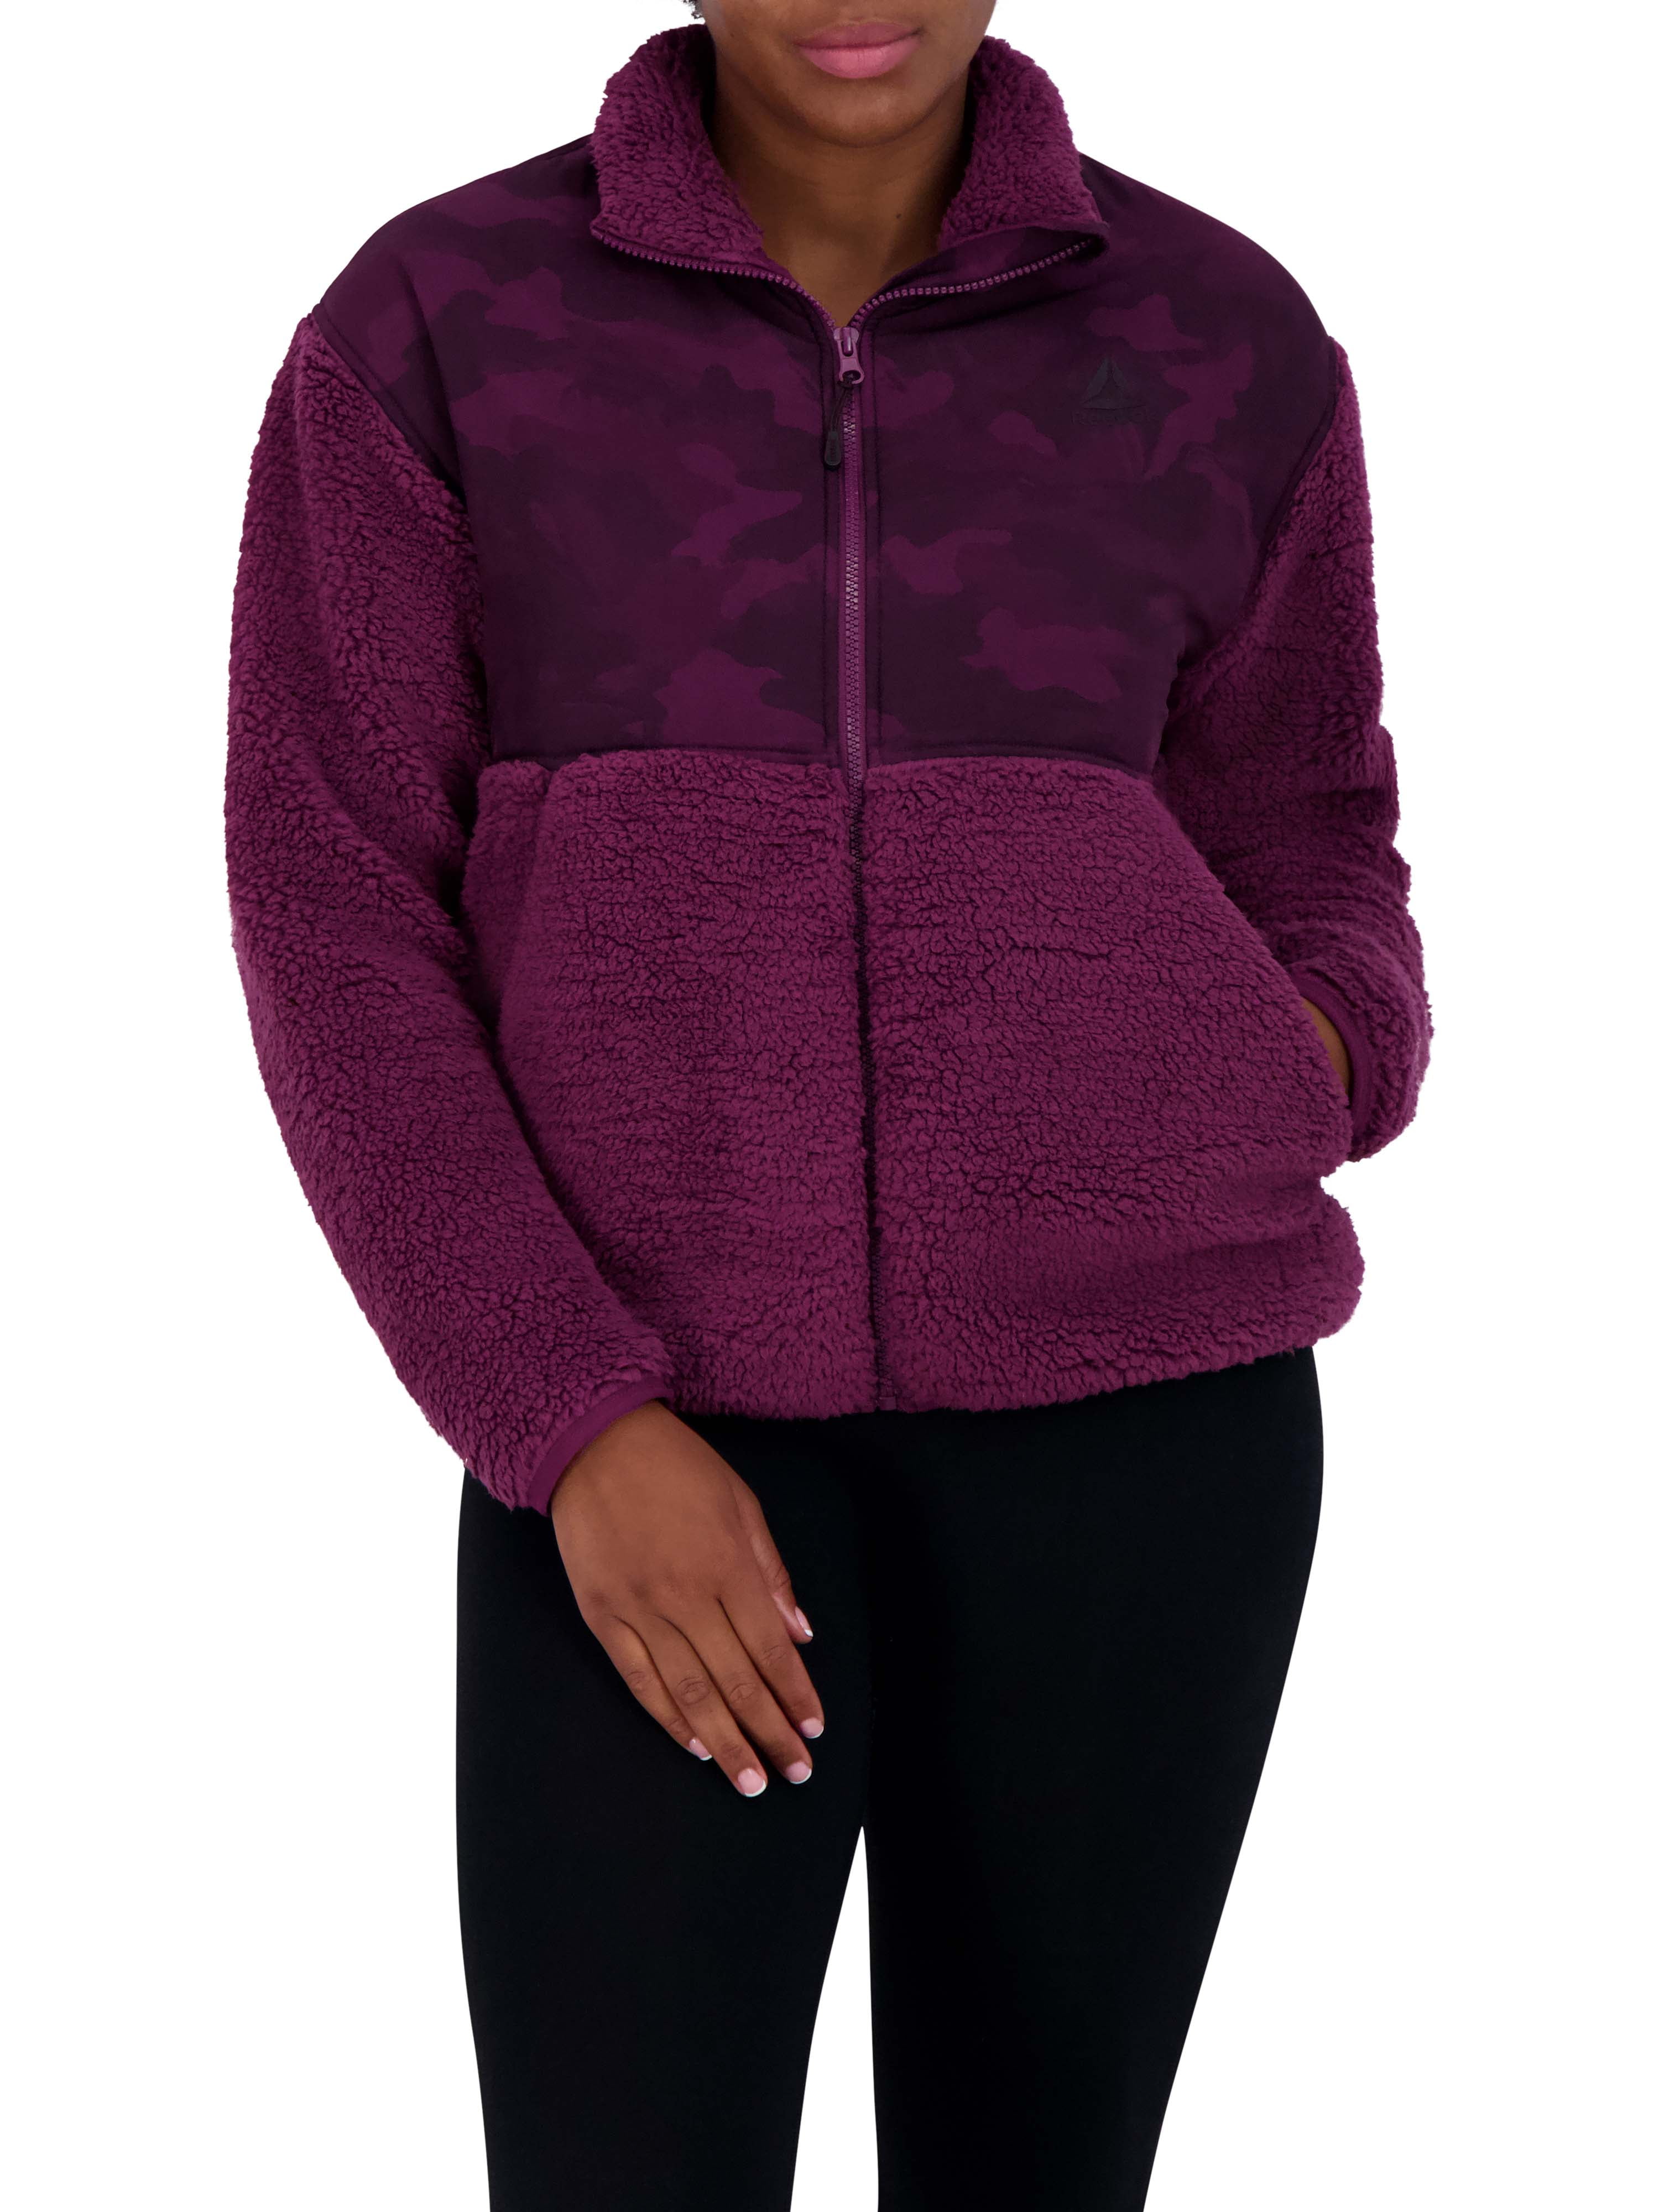 Reebok Women's Super Soft Gravity Sherpa Jacket with Pockets